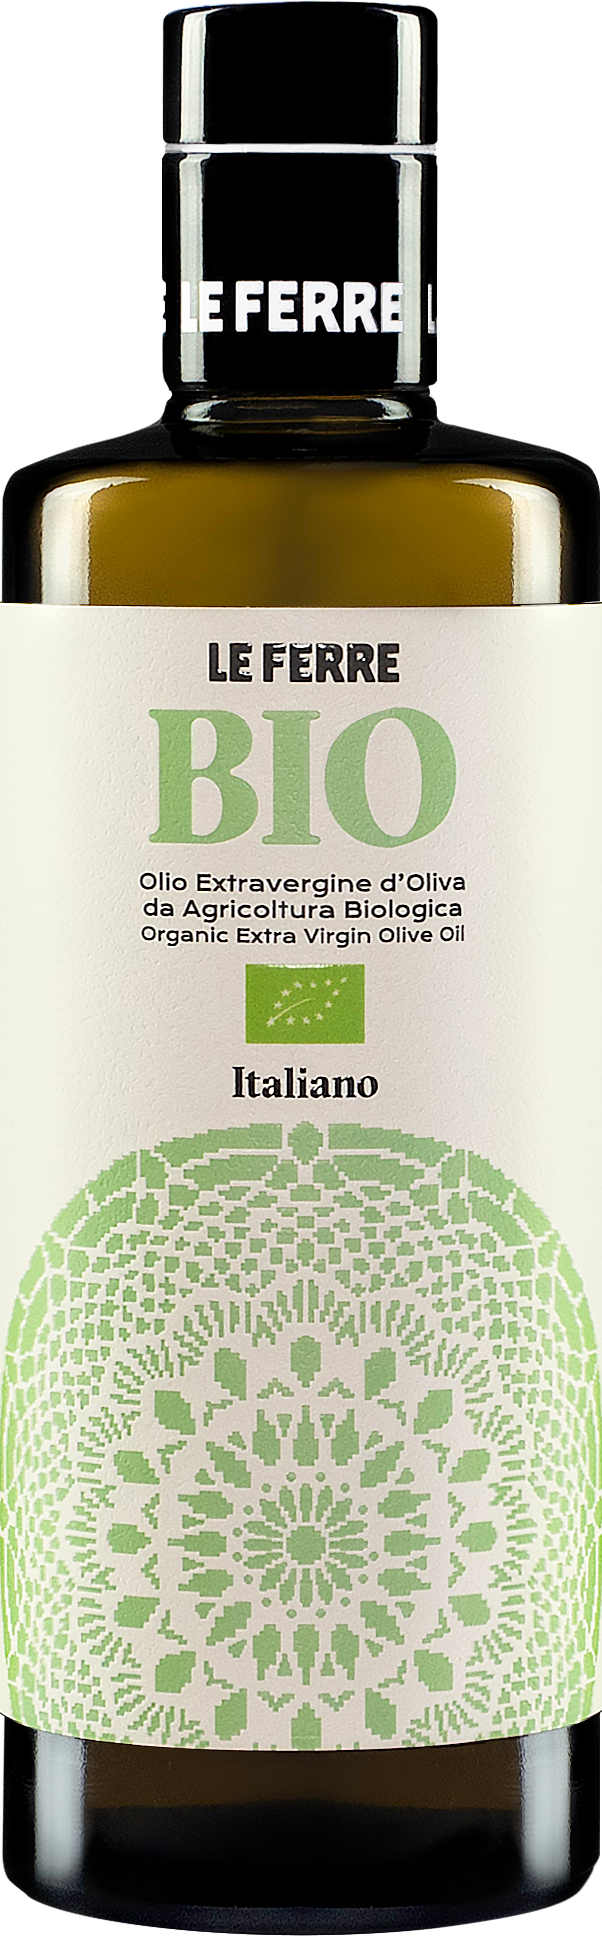 Le Ferre Organic Italian Extra Virgin Olive Oil 500ml Buy Organic Olive Oil online